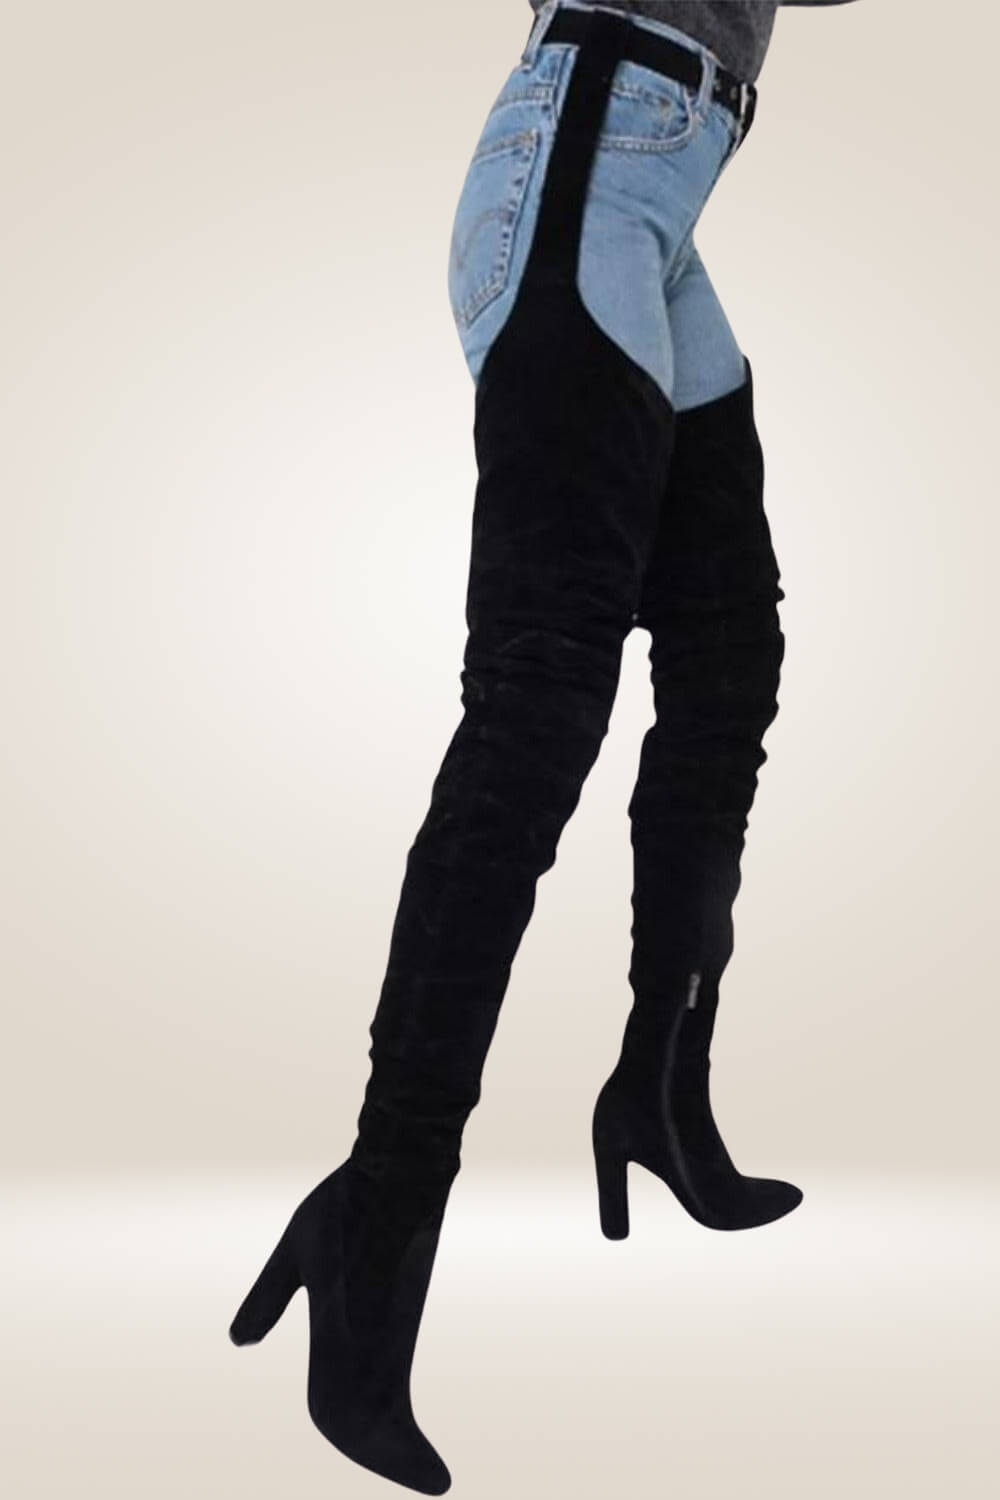 Rihanna Over the Knee Black Boots With Waist Belt - TGC Boutique - Thigh High Boots